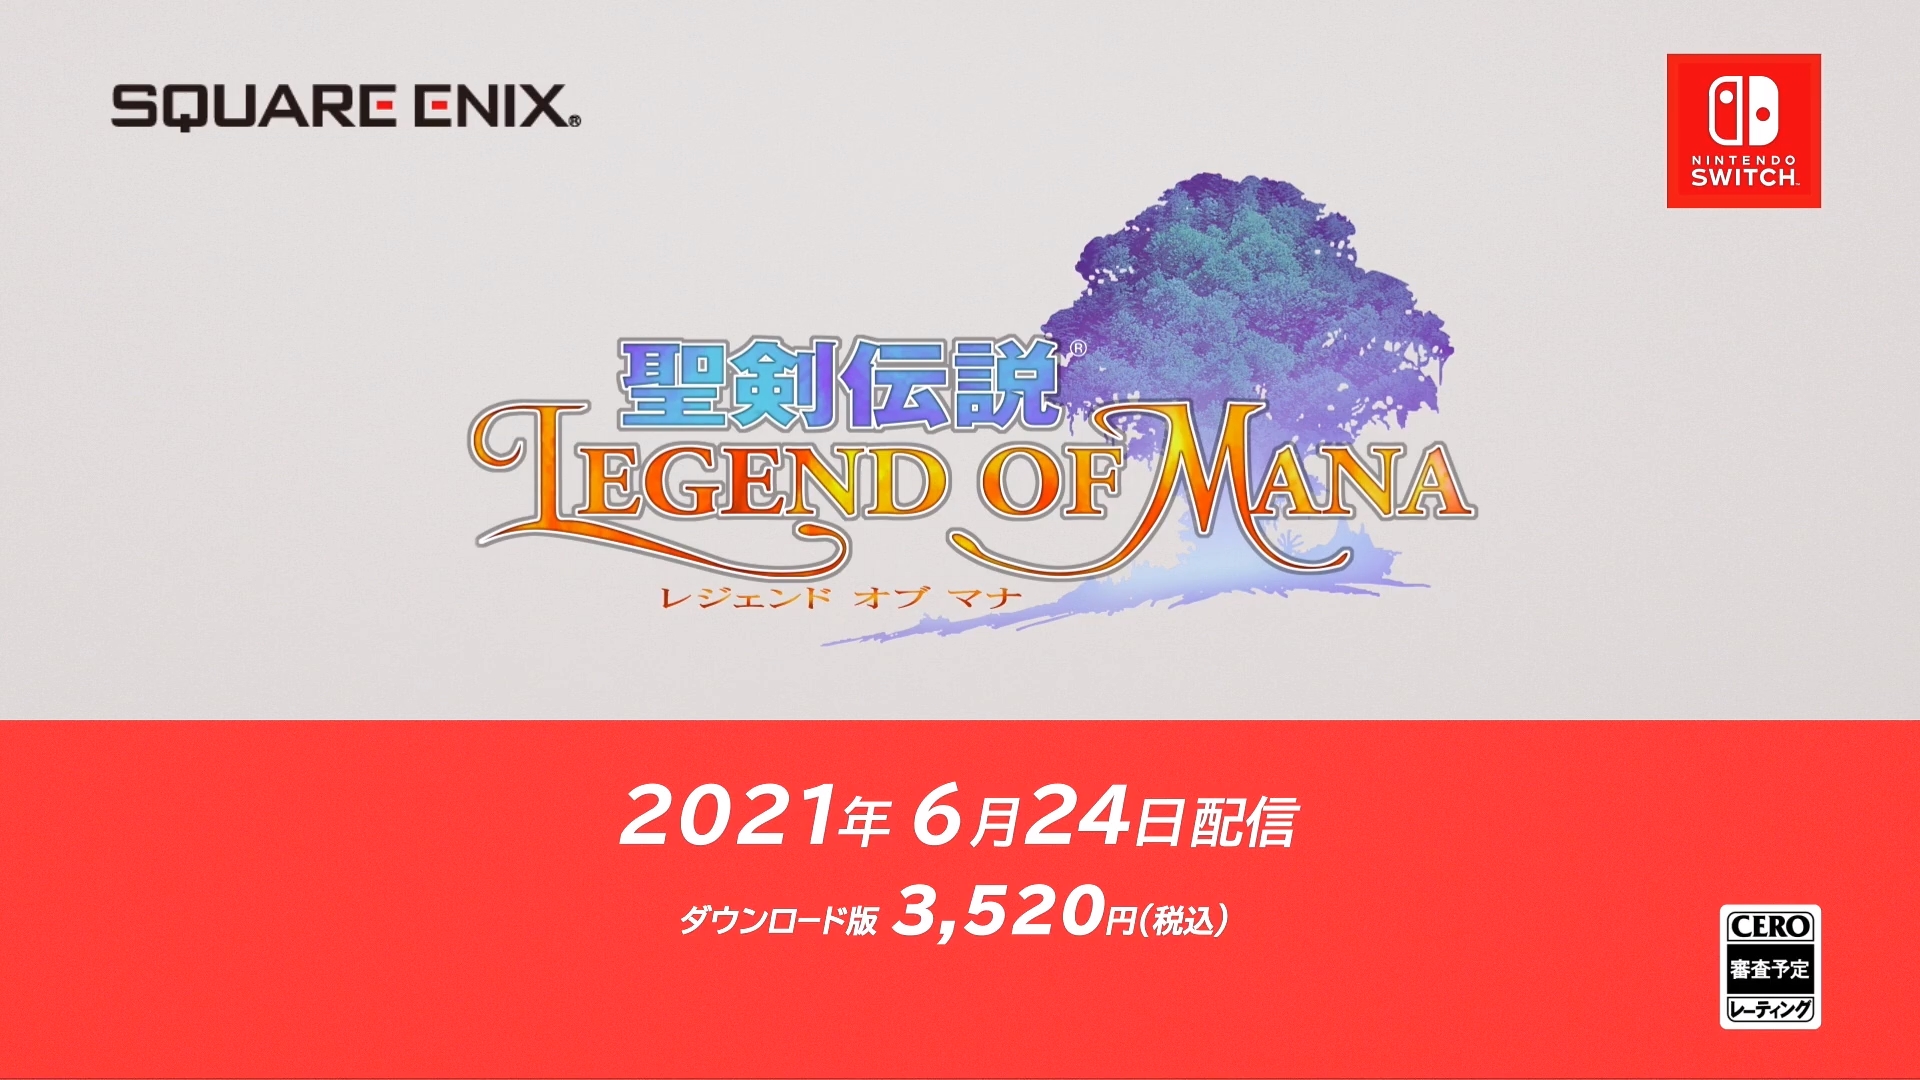 Pc Ps4 Switch用アクションrpg 聖剣伝説 Legend Of Mana Hdリマスター版が6月24日に発売